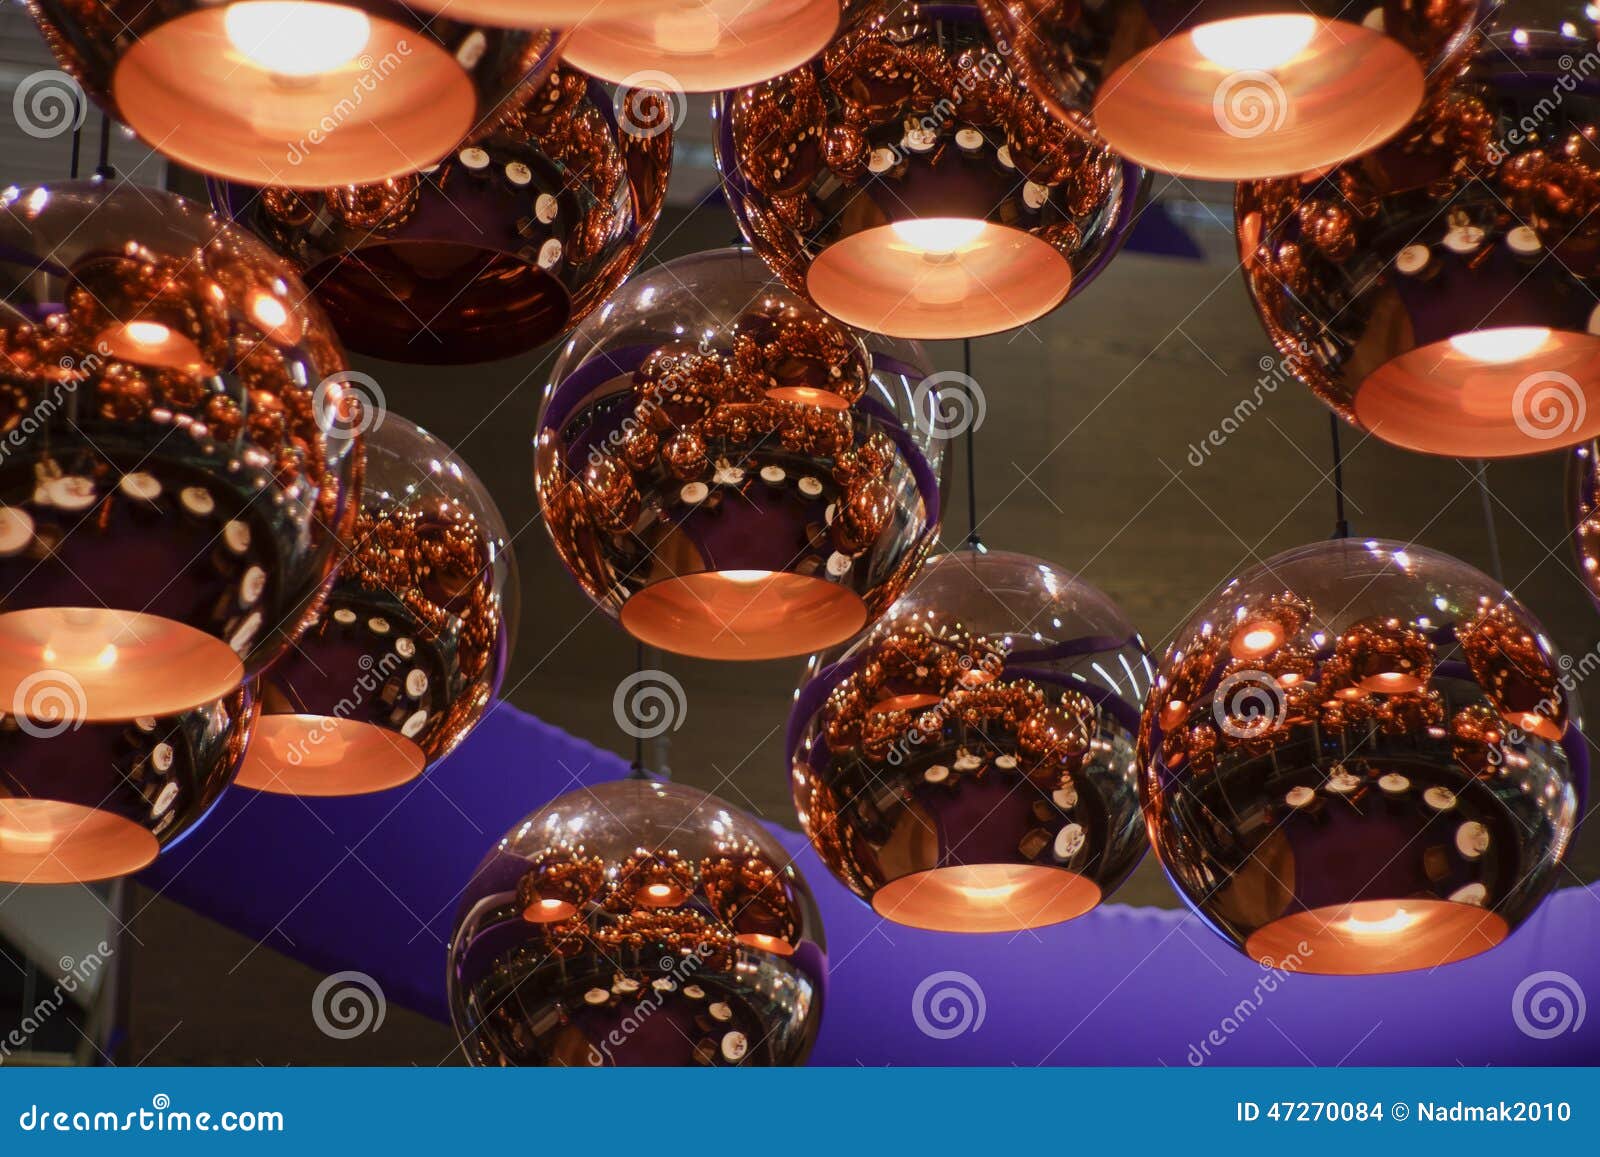 Light Fixtures - Luminous Decoration Stock Photo - Image of sphere ...